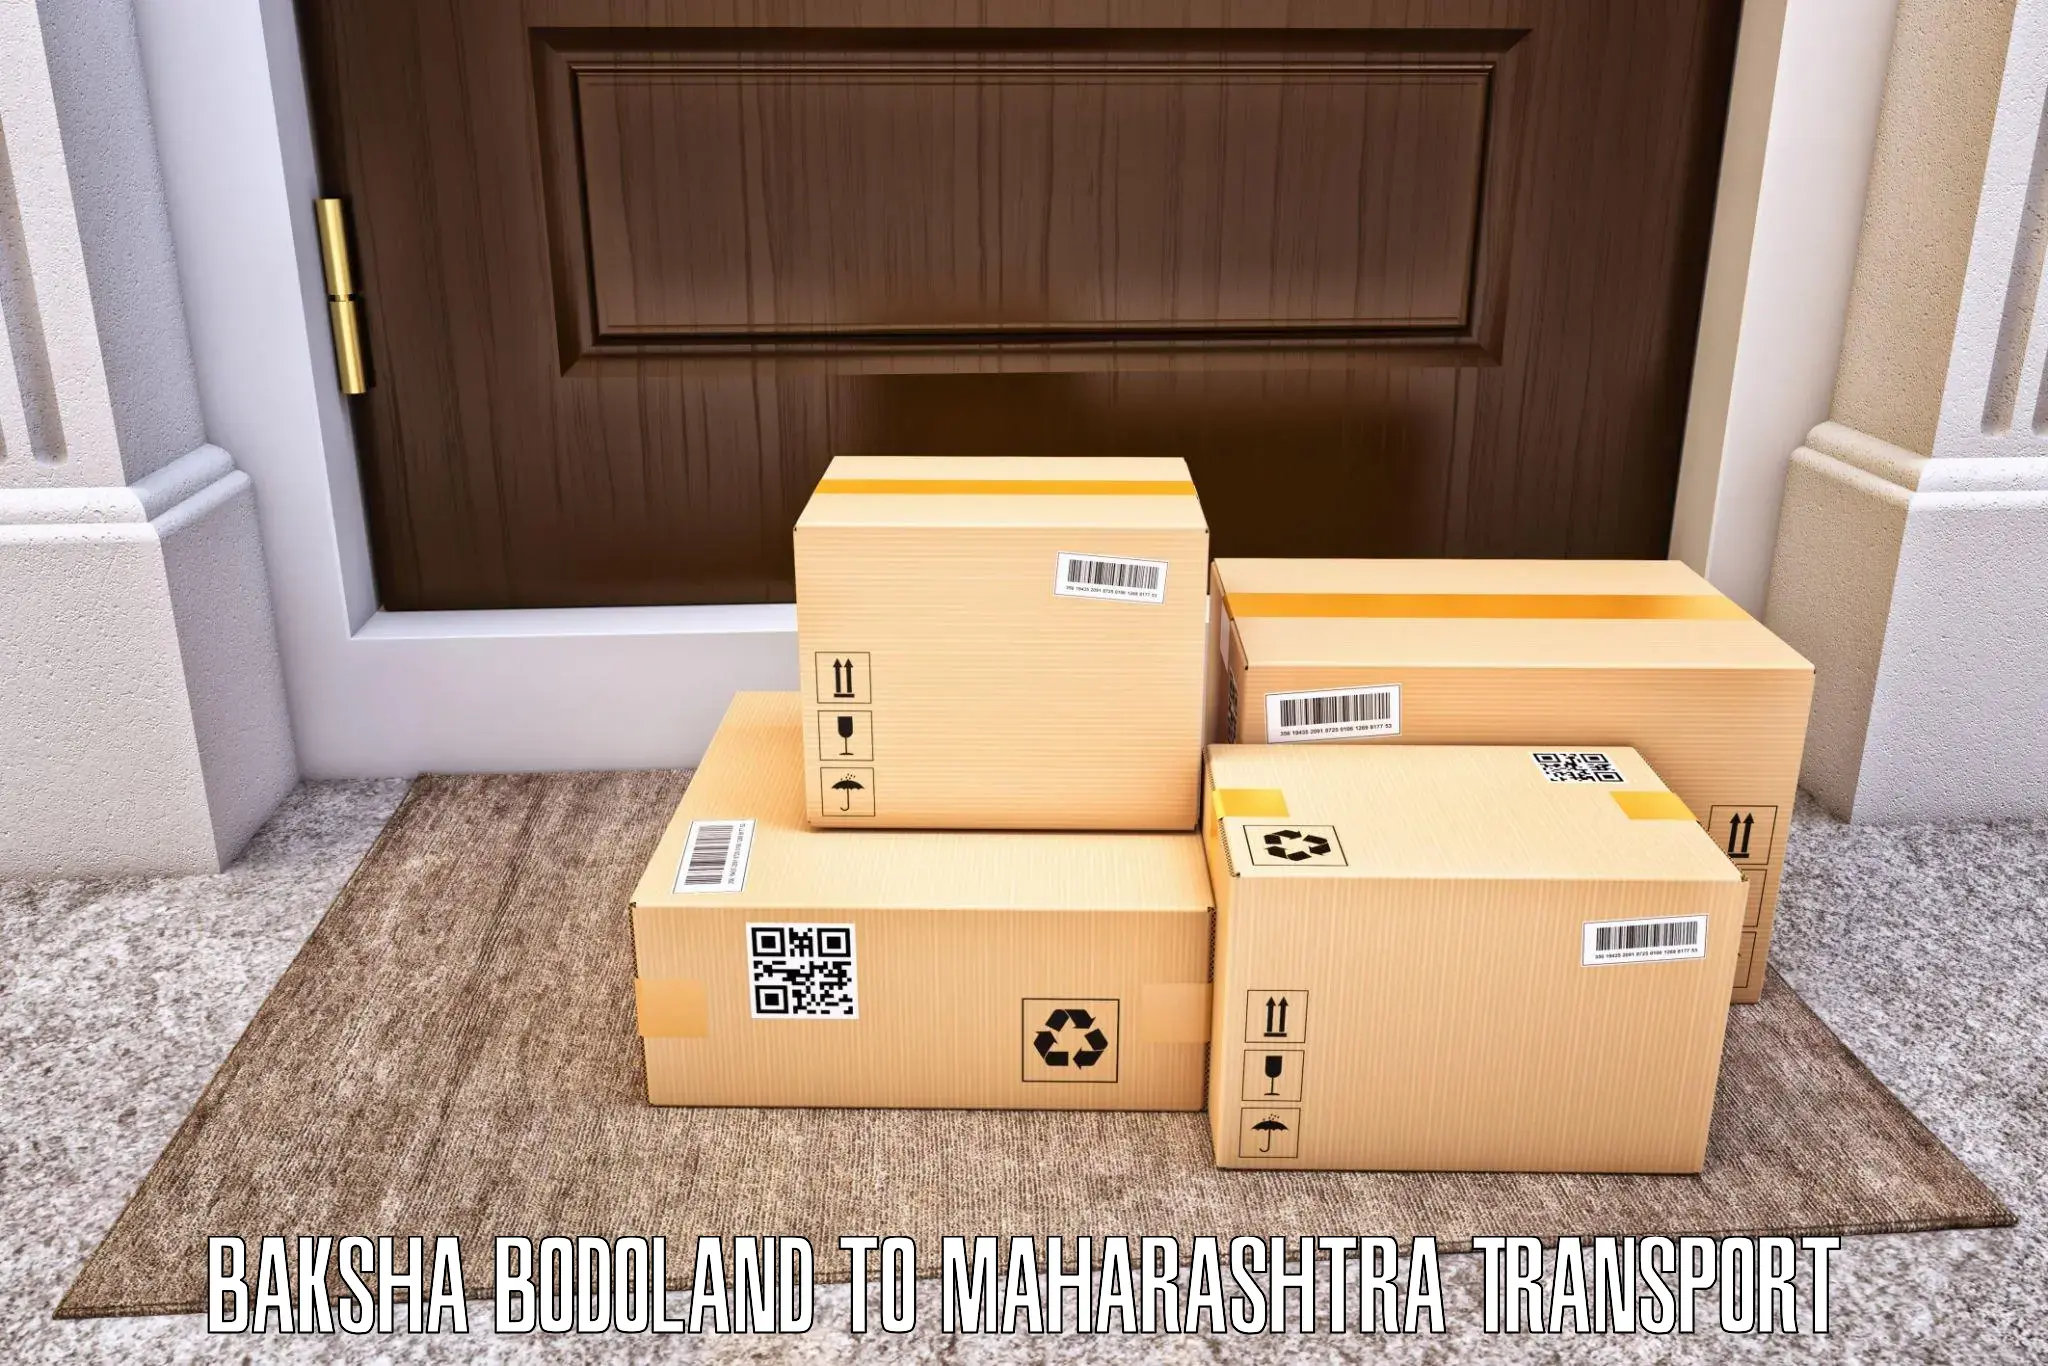 Daily parcel service transport Baksha Bodoland to Pathardi